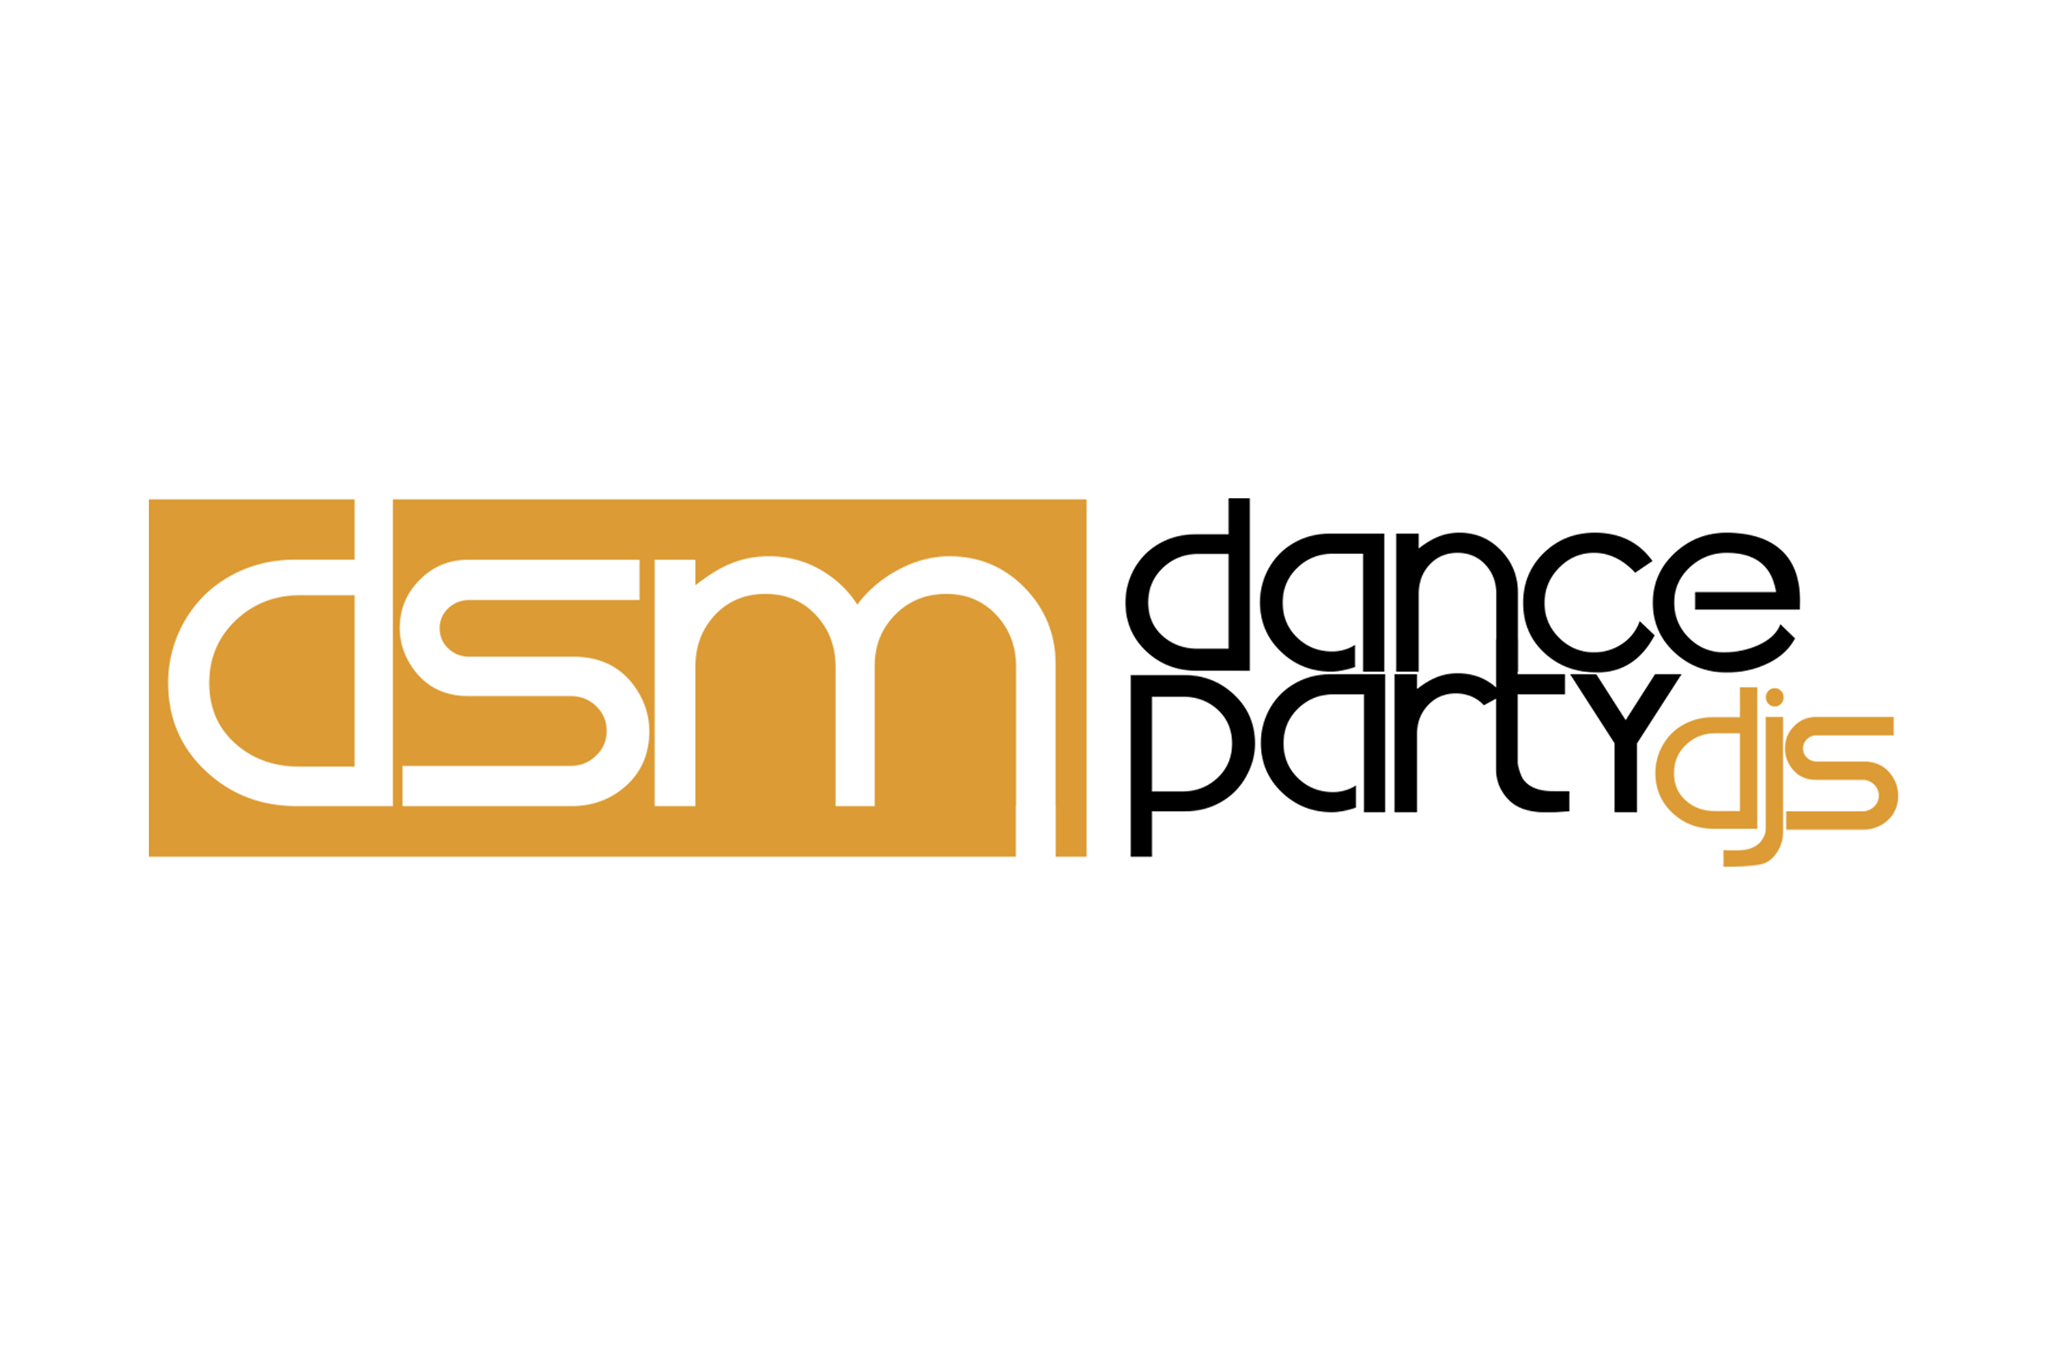 DSM Dance Party DJs